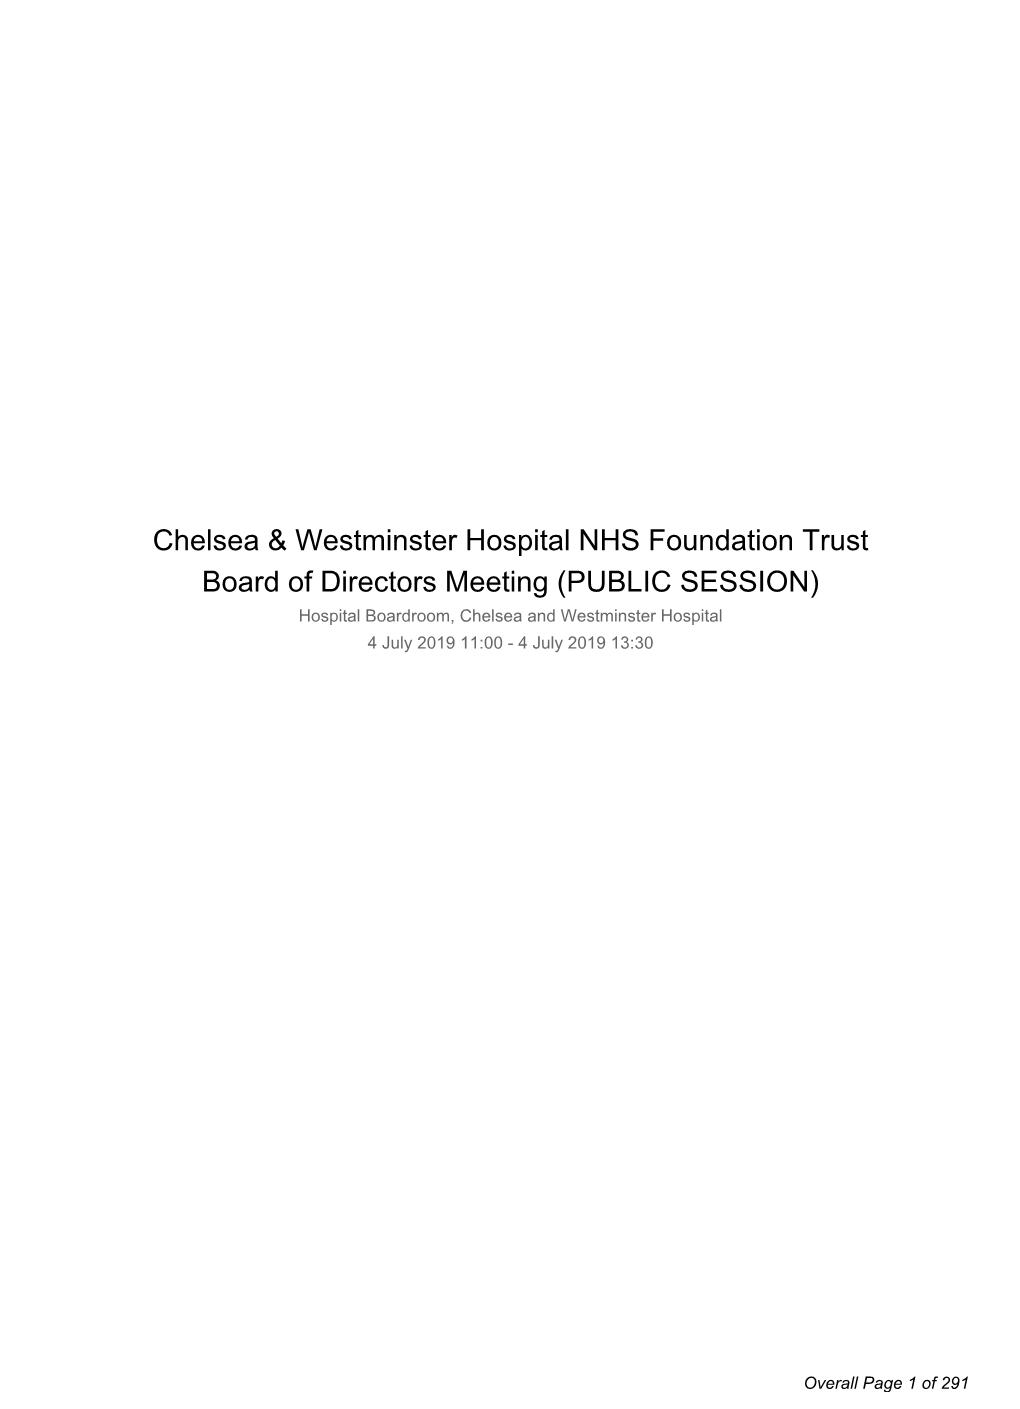 Chelsea & Westminster Hospital NHS Foundation Trust Board of Directors